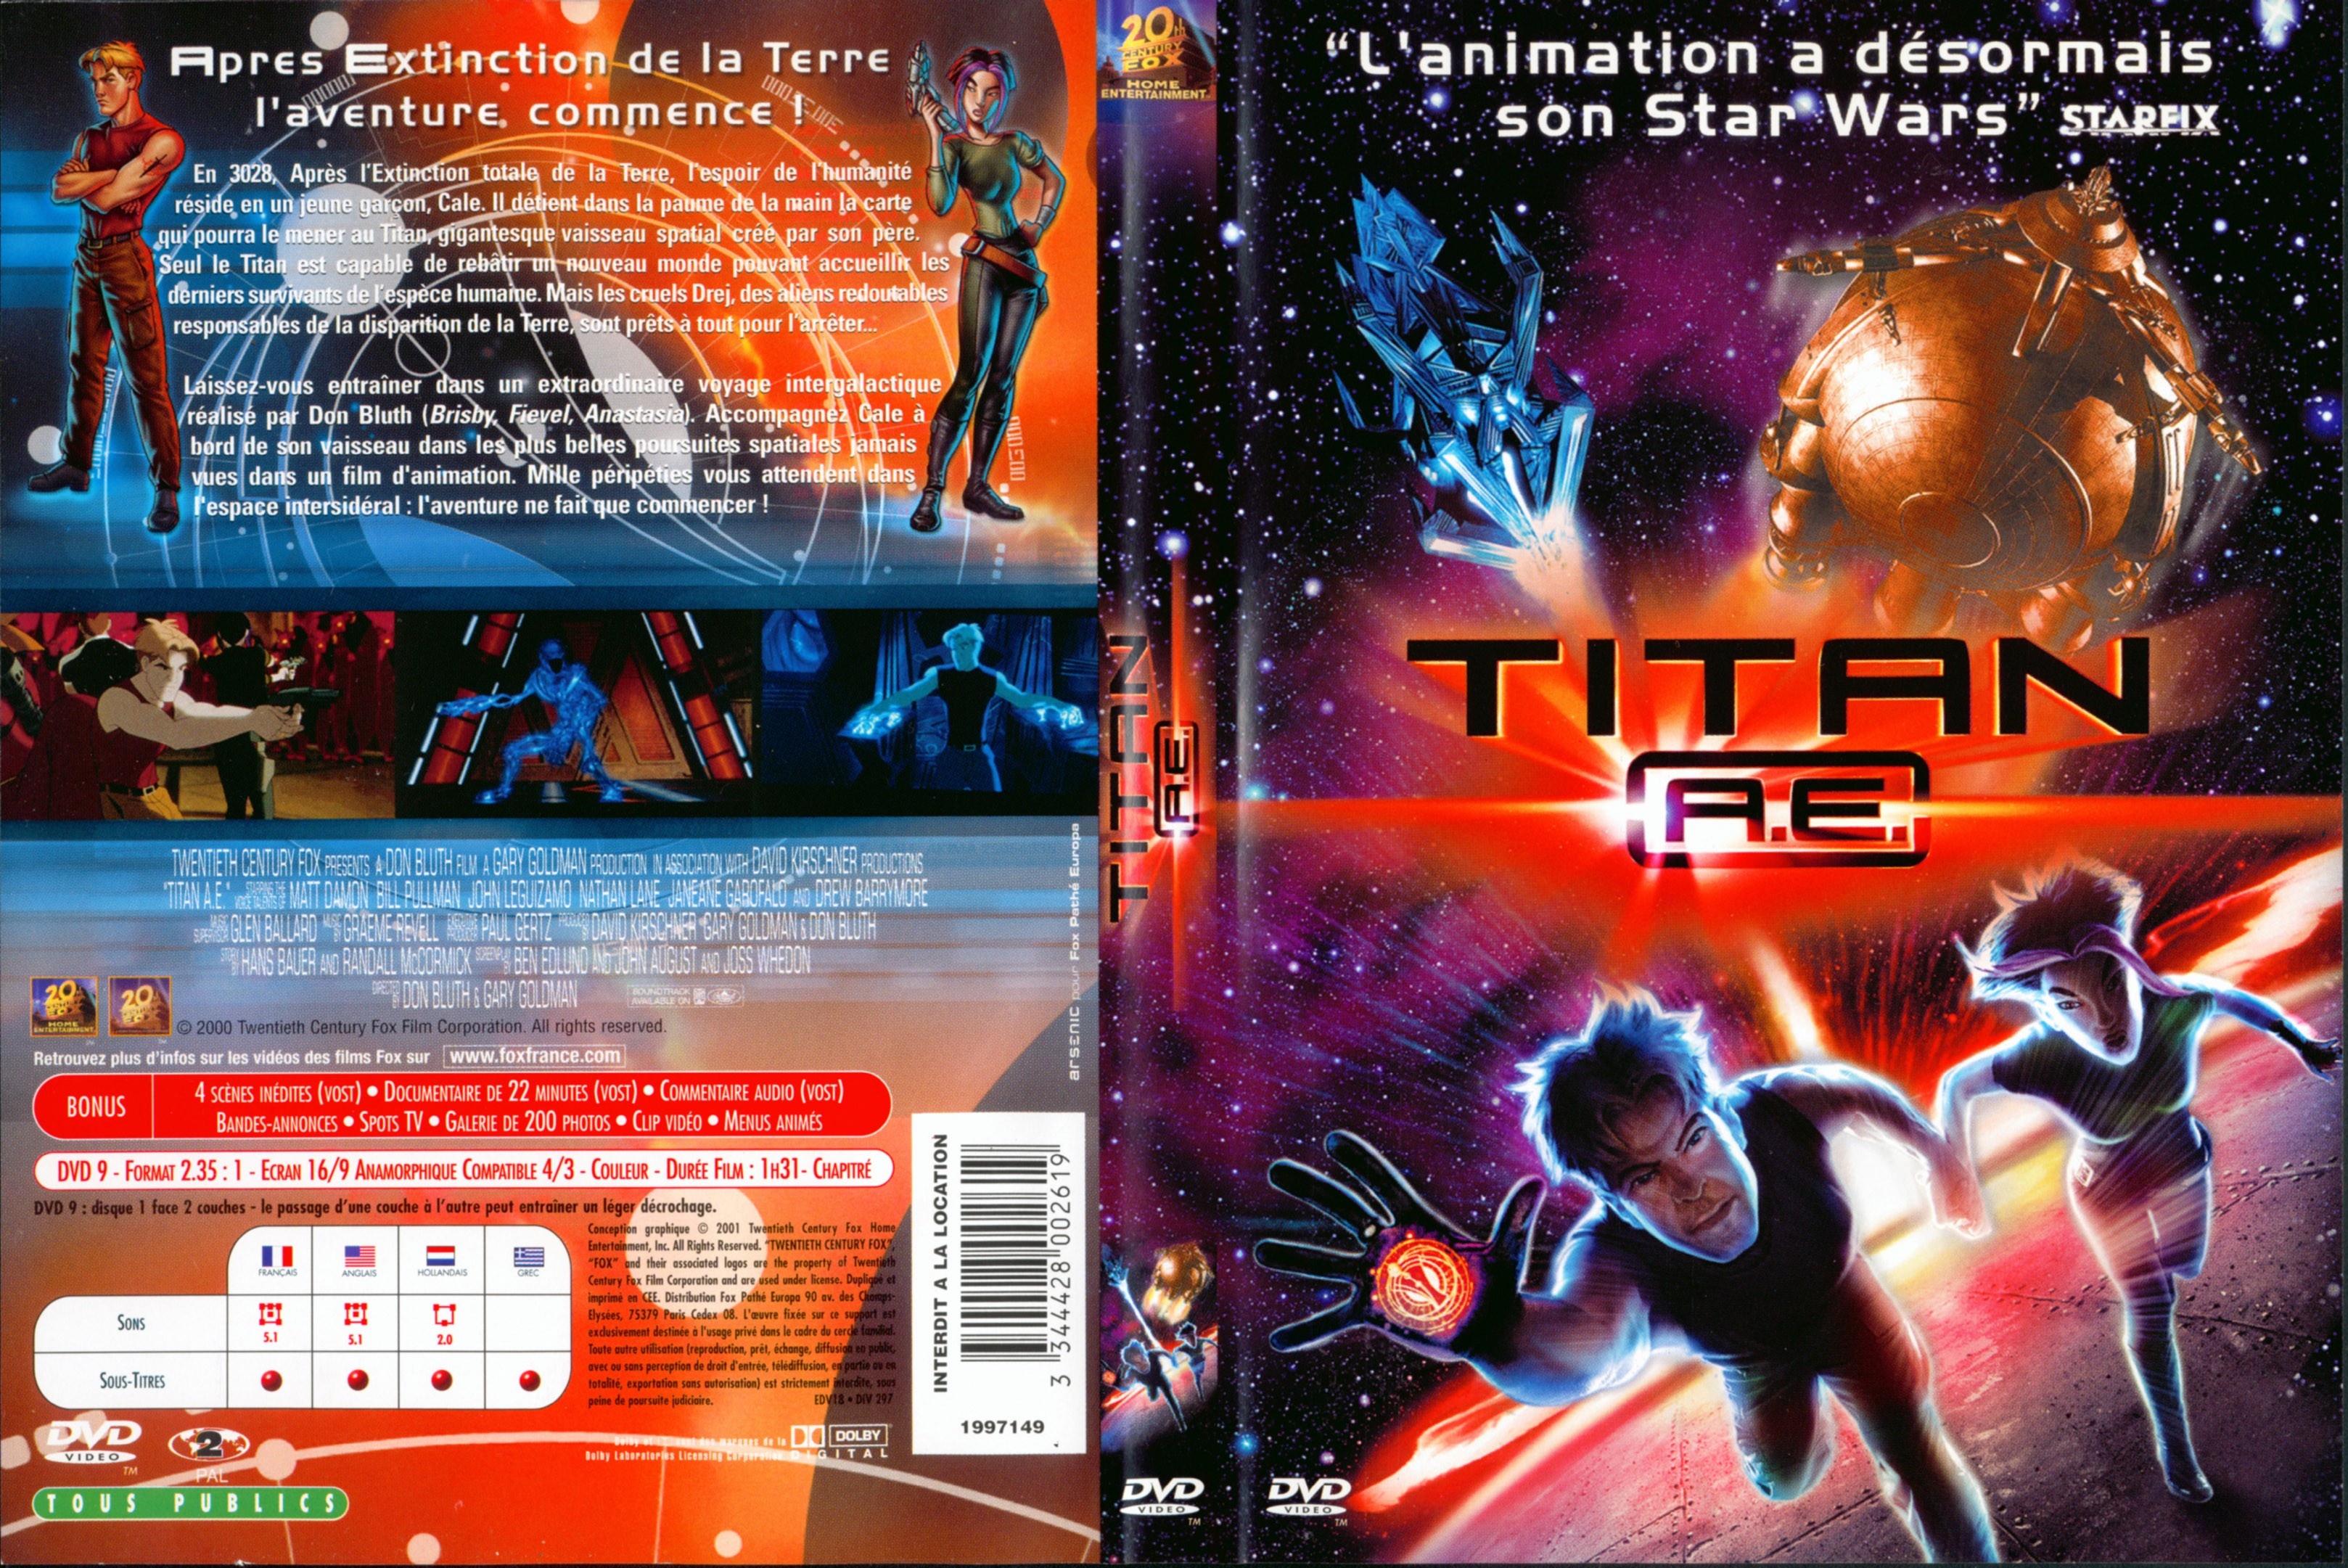 Jaquette DVD Titan AE